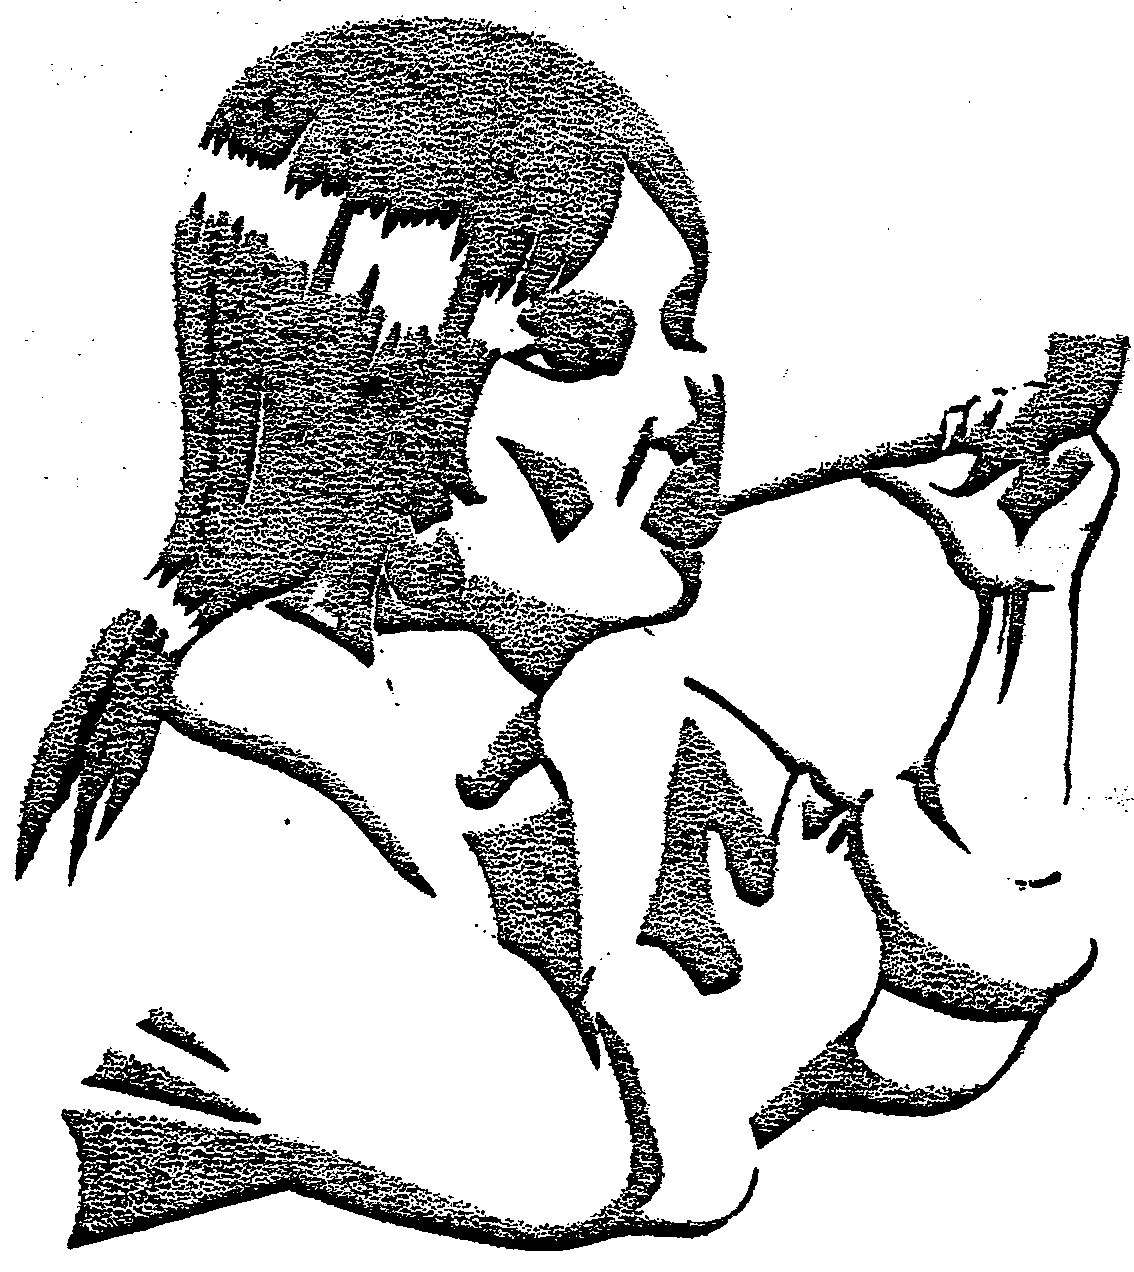 Tegning kvinde ryger (opiums?)pibe